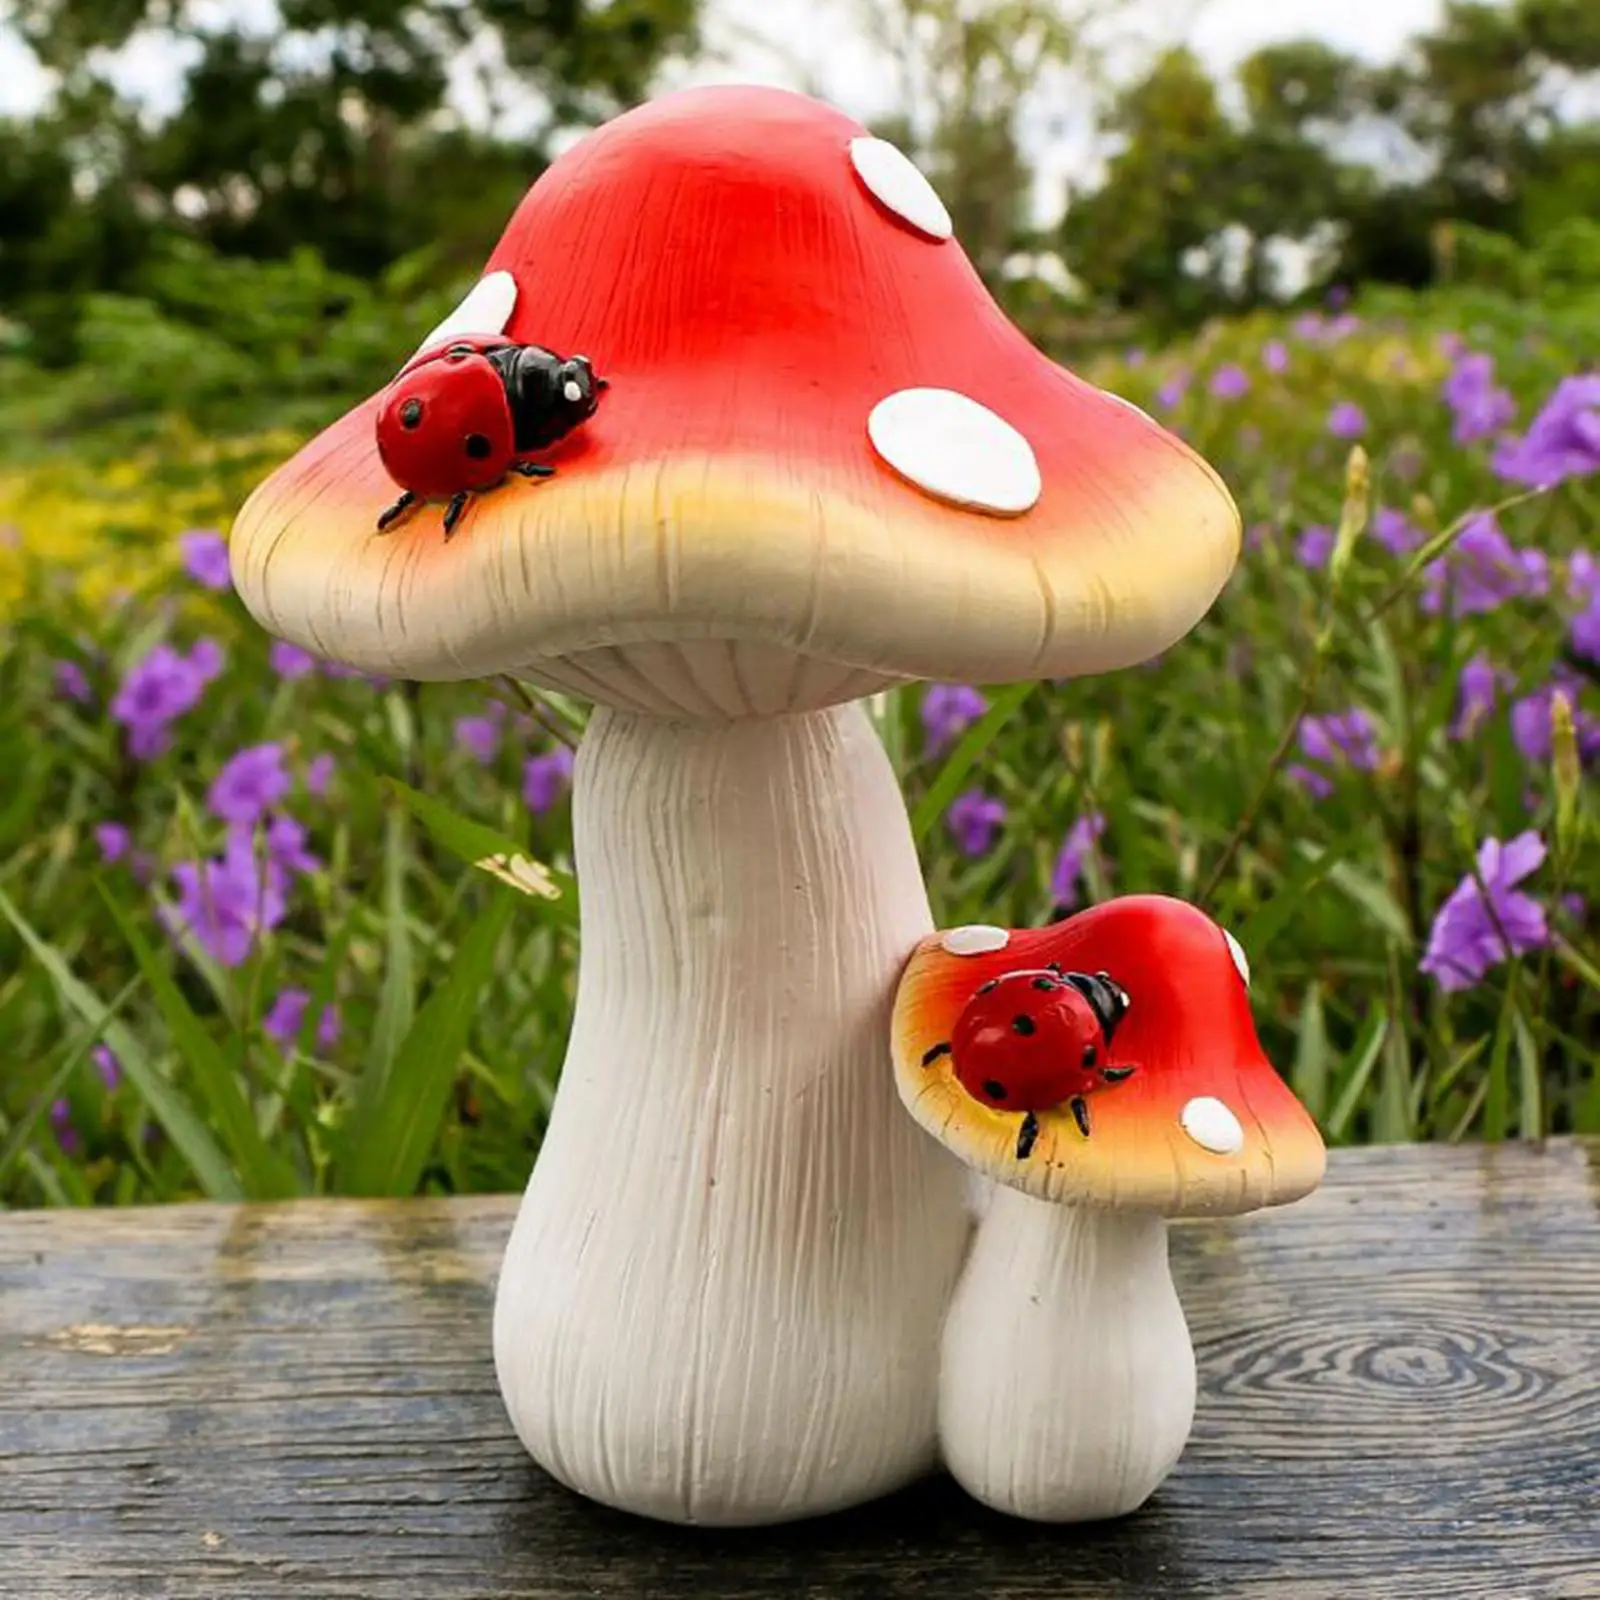 Simulation Garden Mushroom Statue Miniature for Home Patio Yard Outdoor Indoor Decor